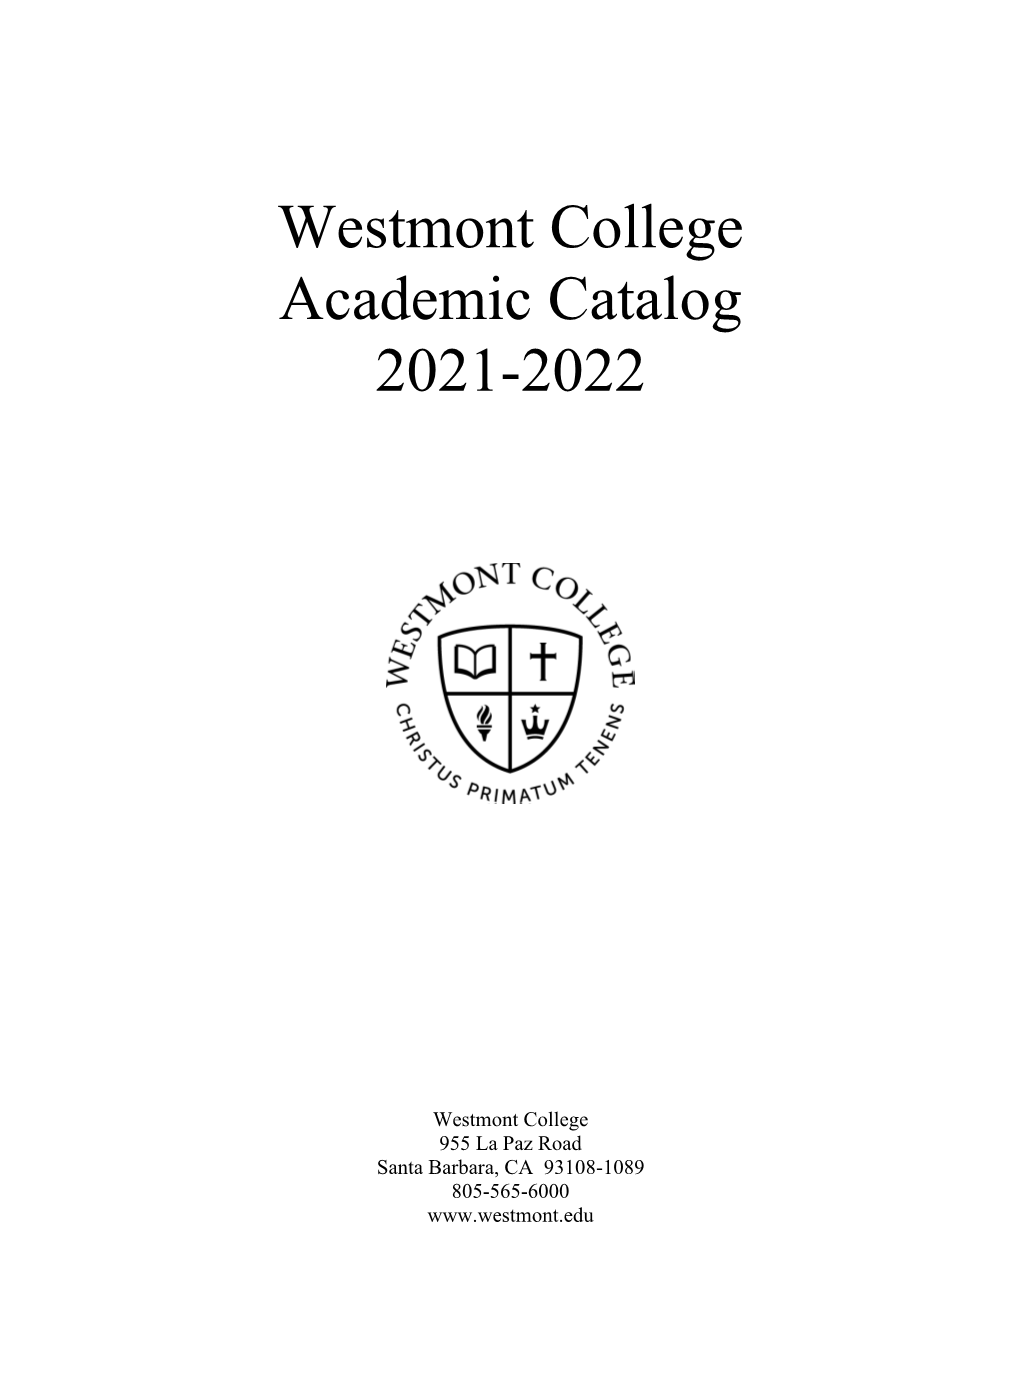 Westmont College Academic Catalog 2021-2022